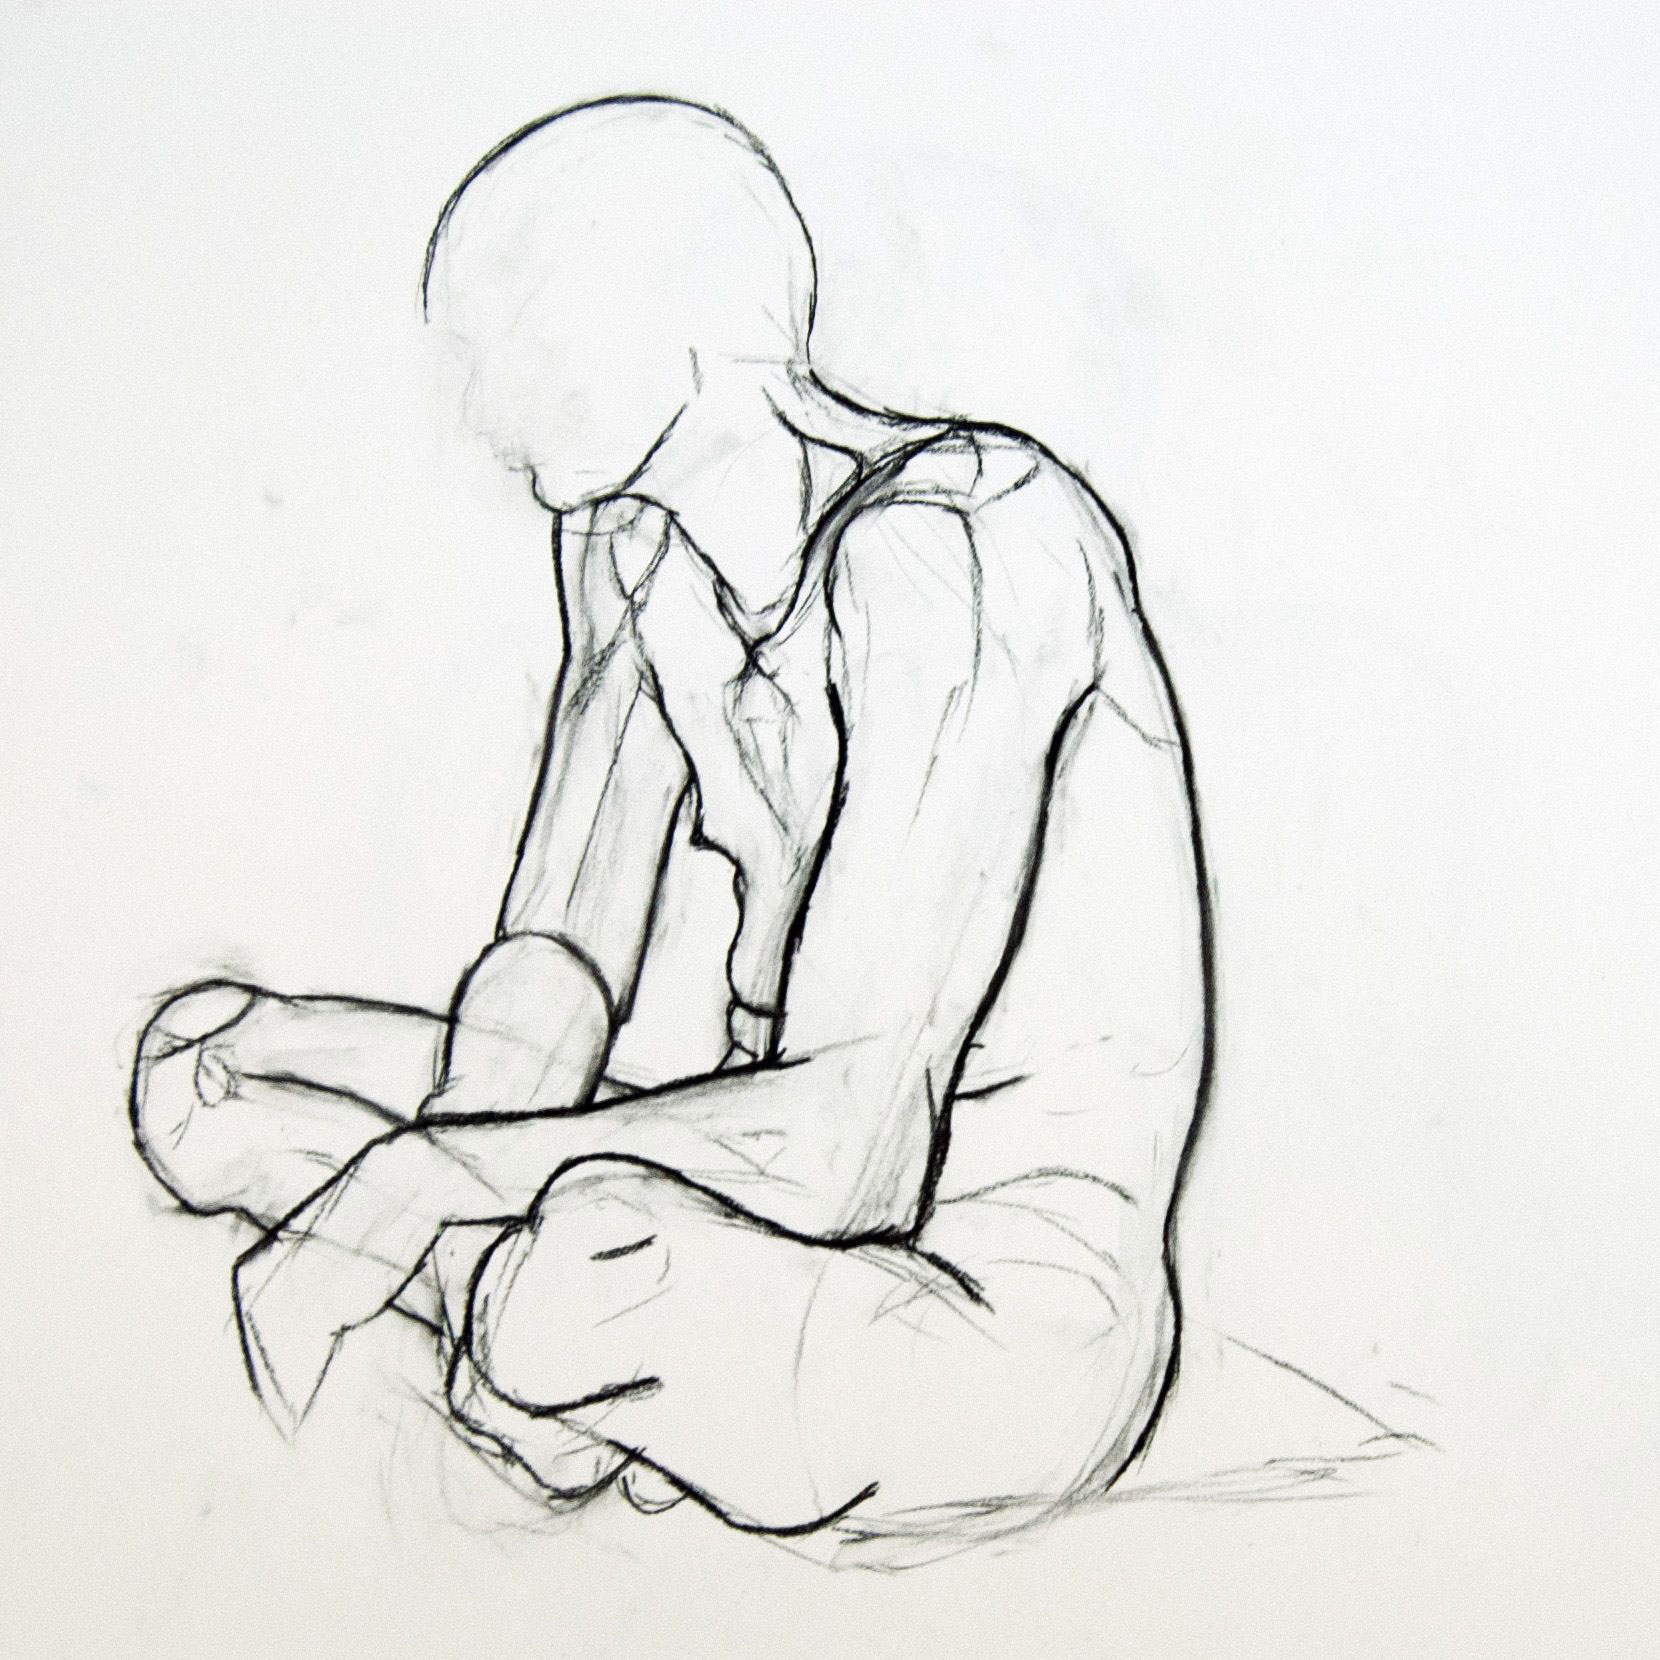 Sitting cross legged drawing reference